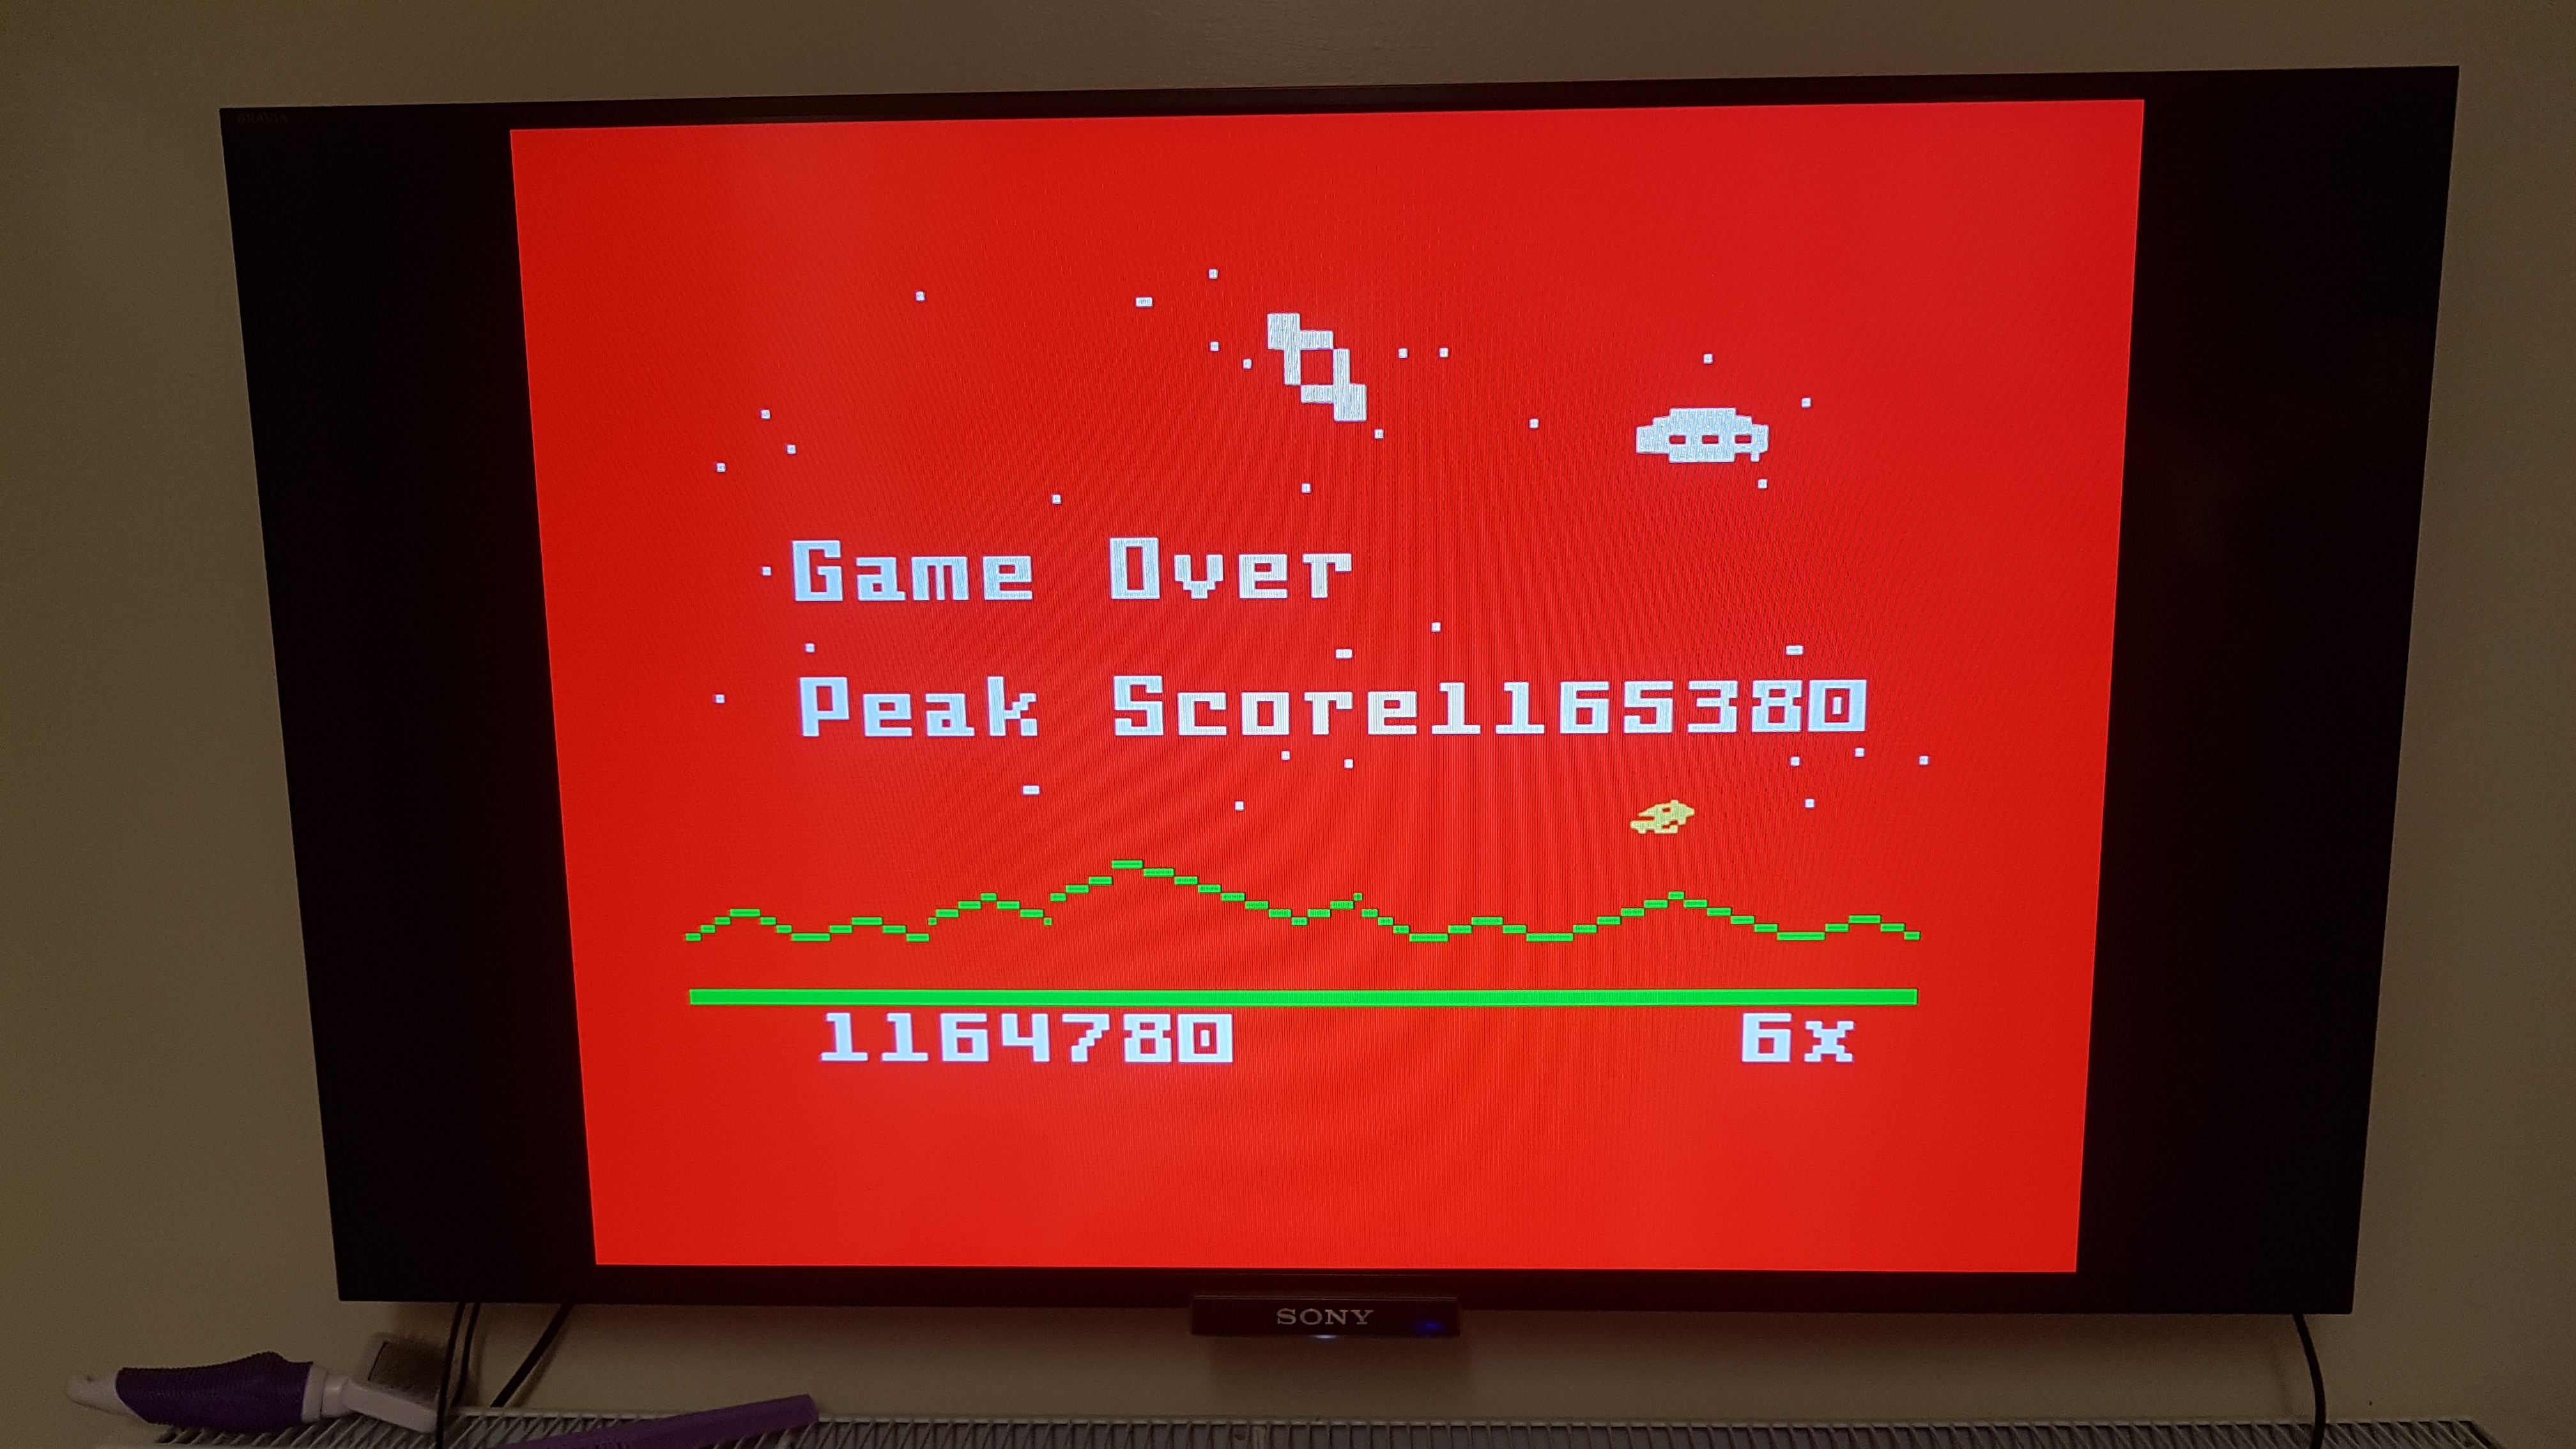 Astrosmash [Peak Score] 1,165,380 points